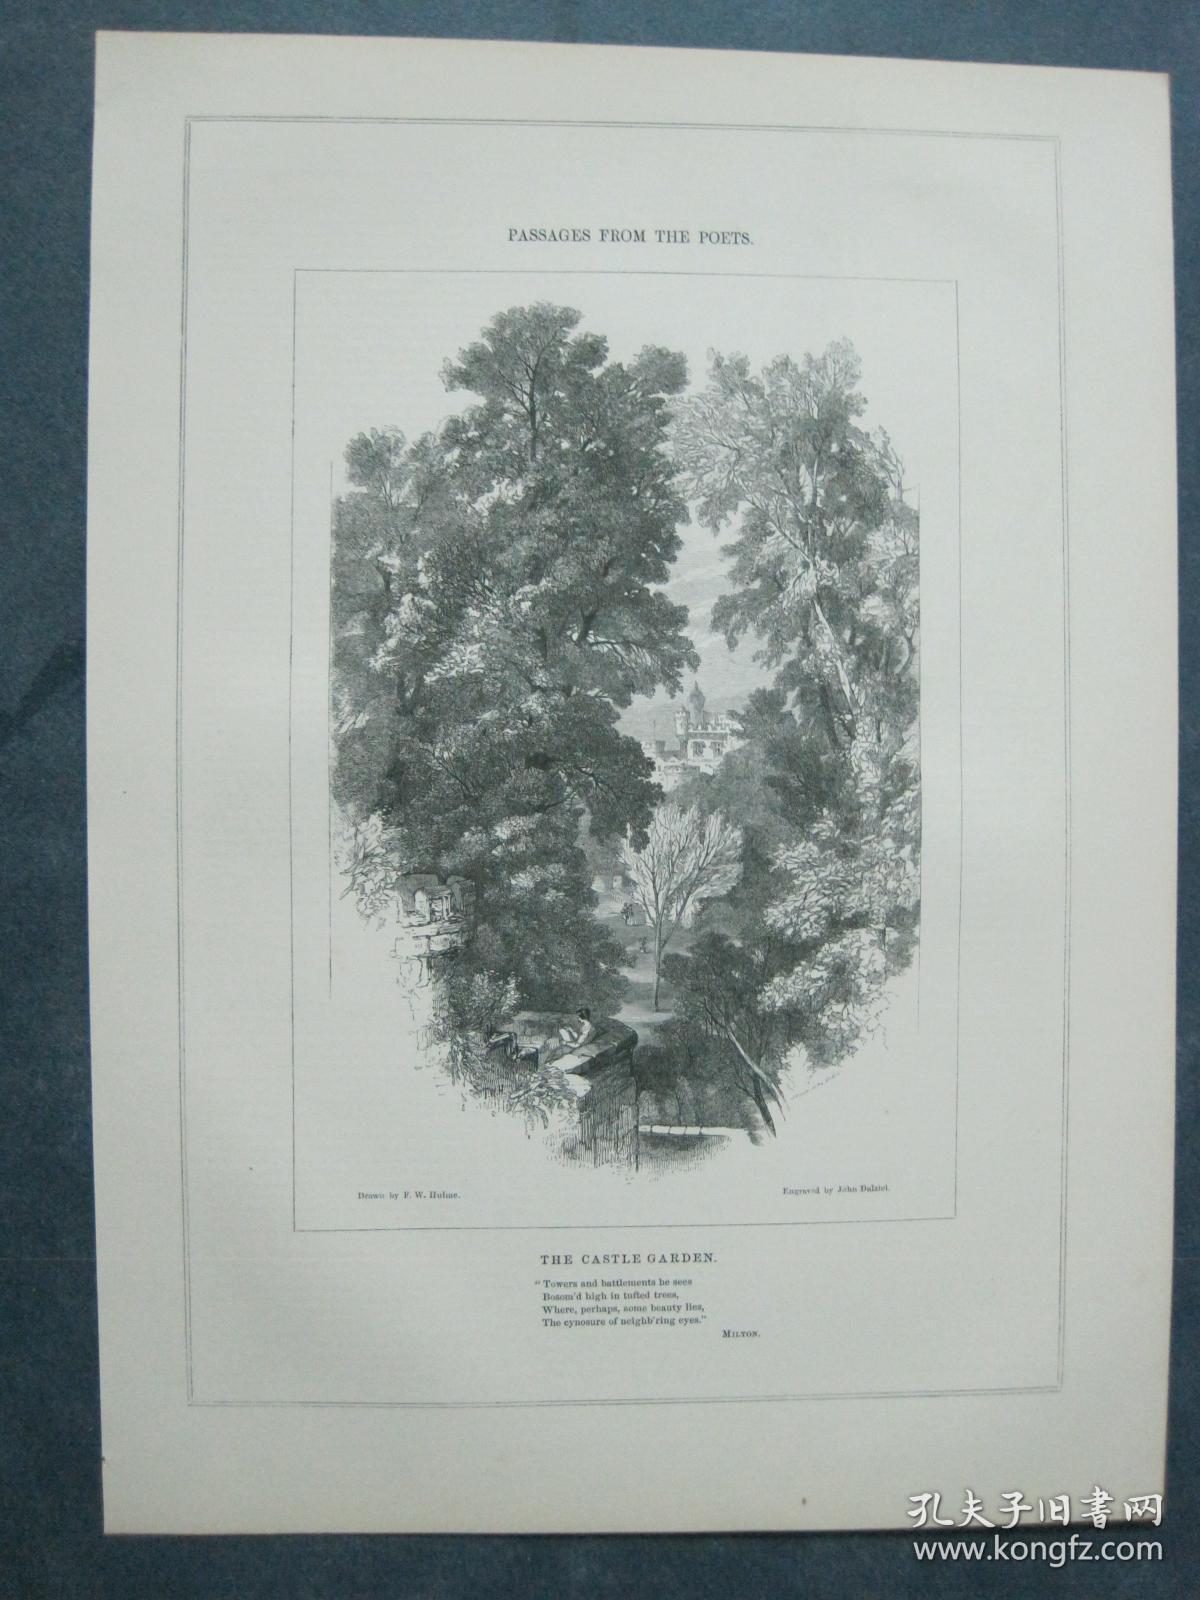 1850年 木口木刻 木版画 PASSAGES FROM THE POETS系列之22《THE CASTLE GARDEN》 背面有文字